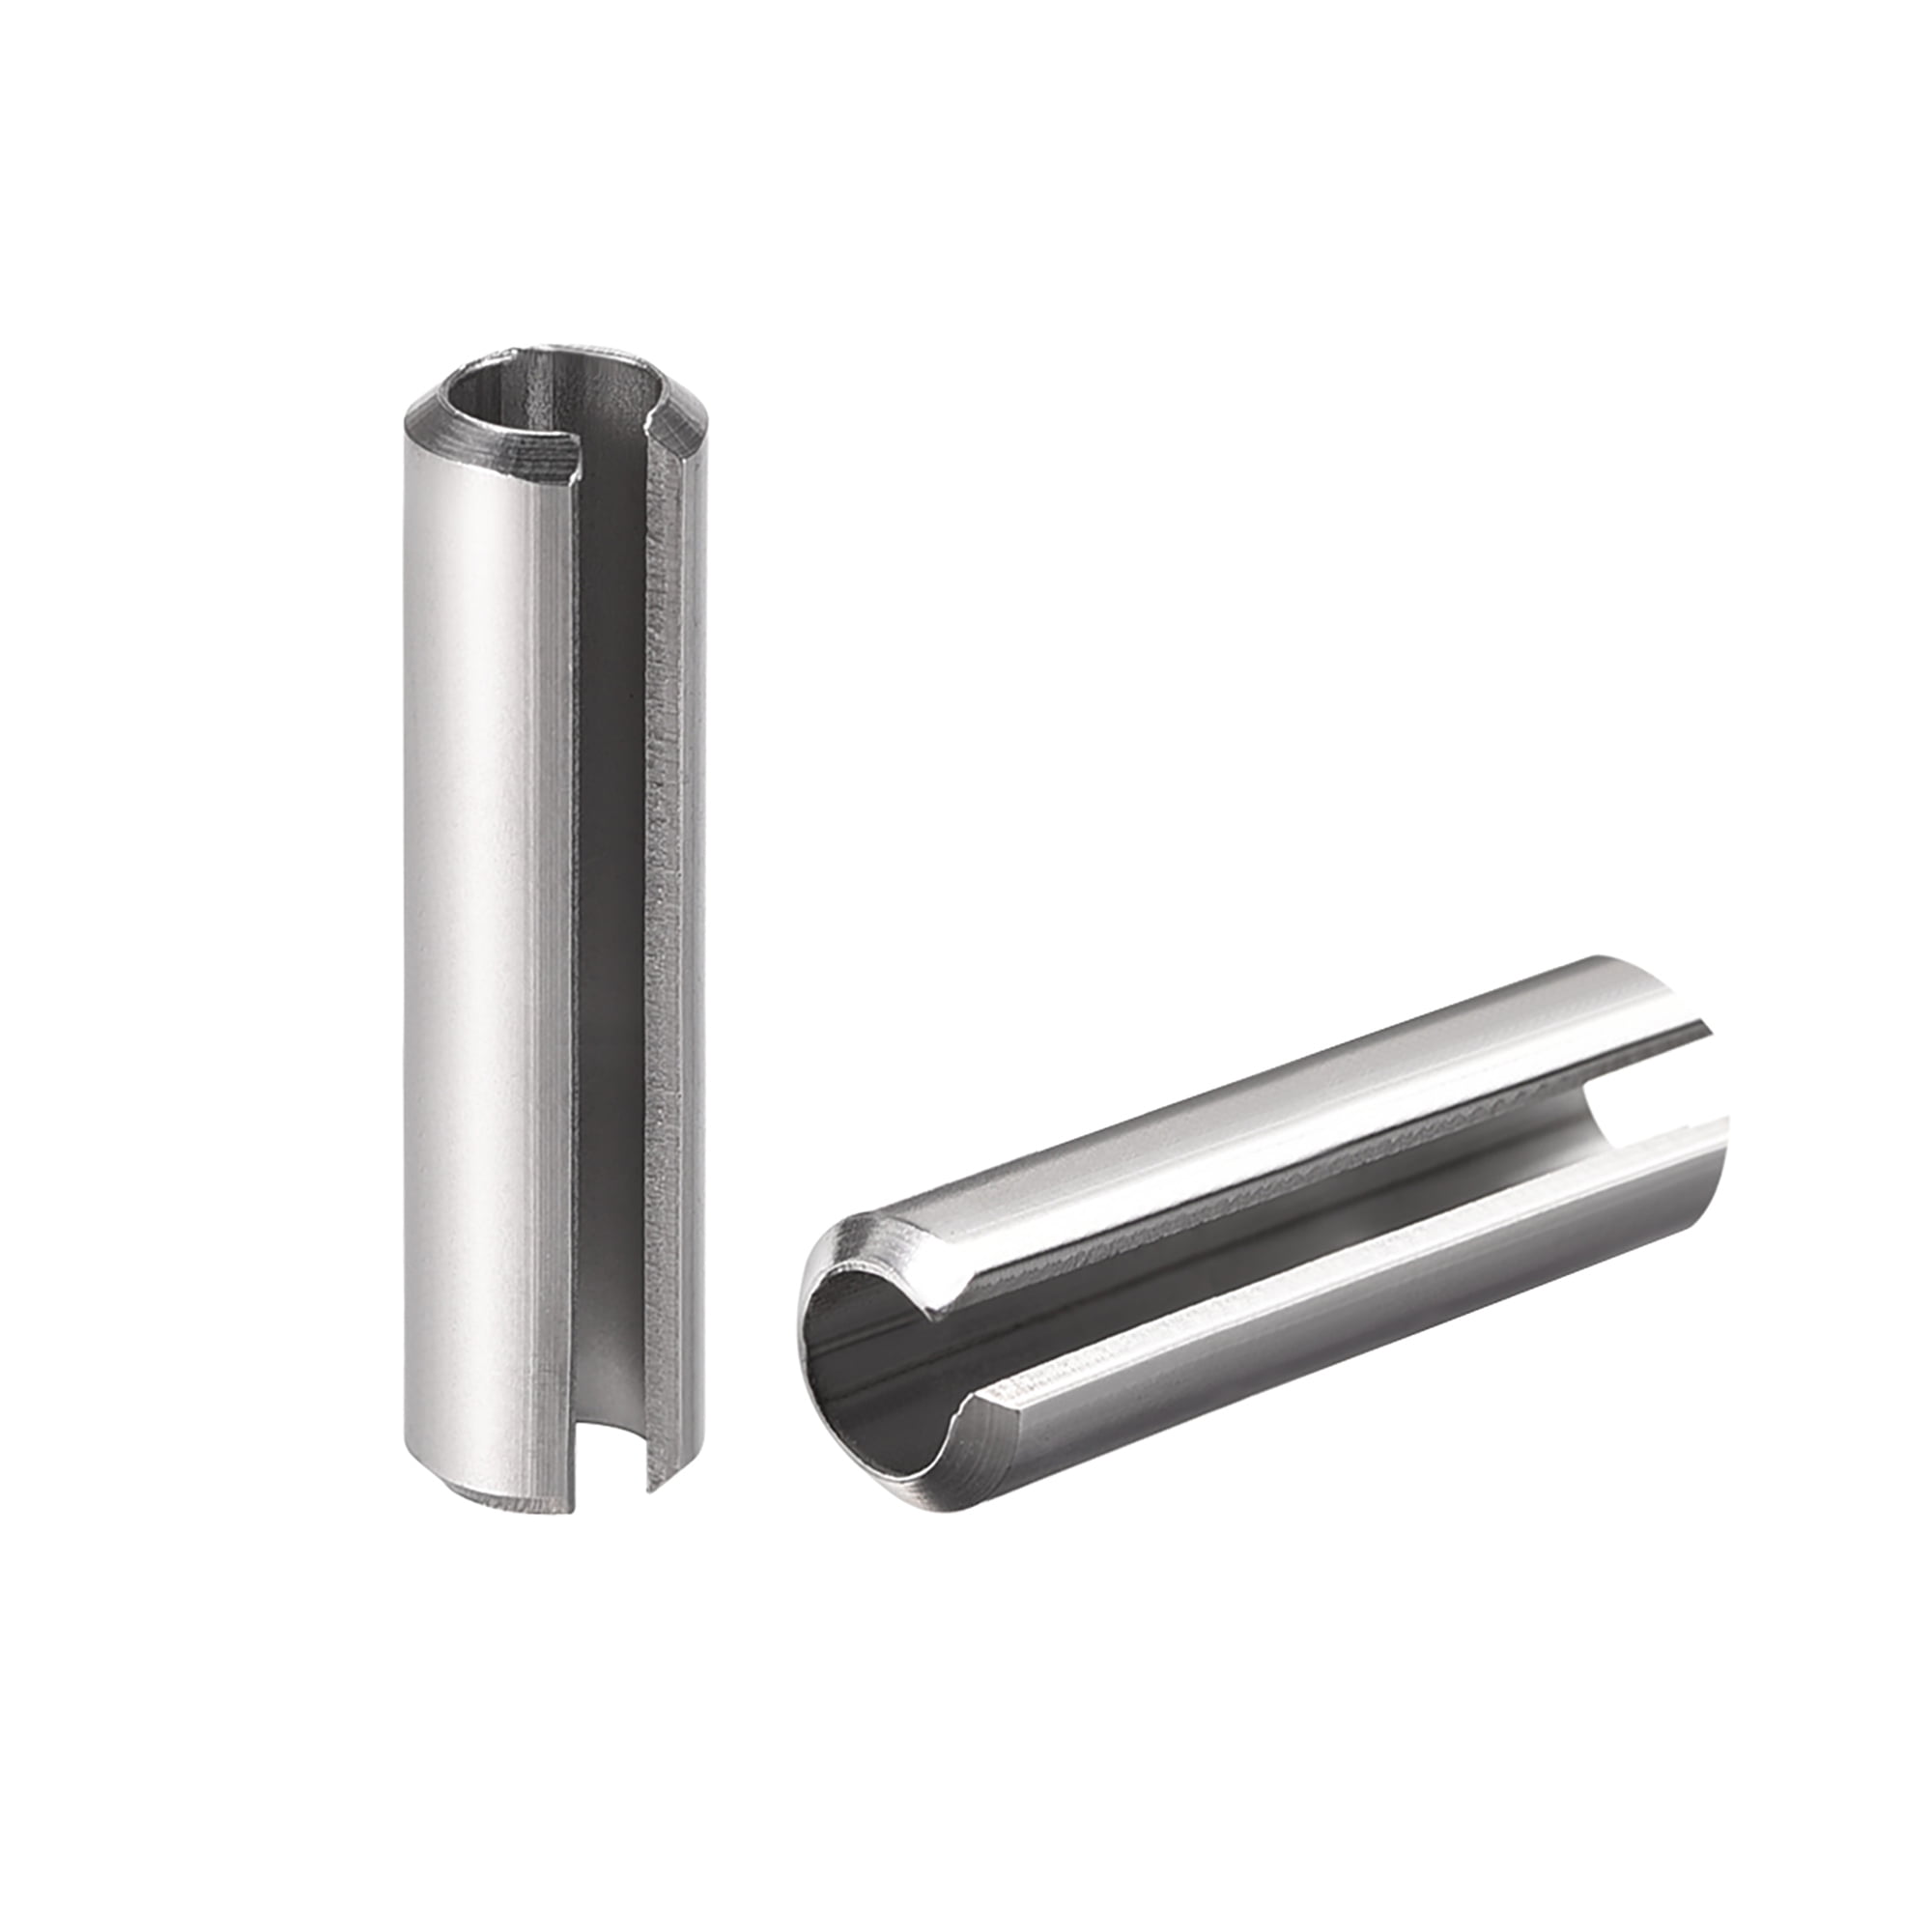 Roll Spring Pin Split Tension Steel Kit Assortment Metric M2 M3 M4 M5 M6 M8 M10 